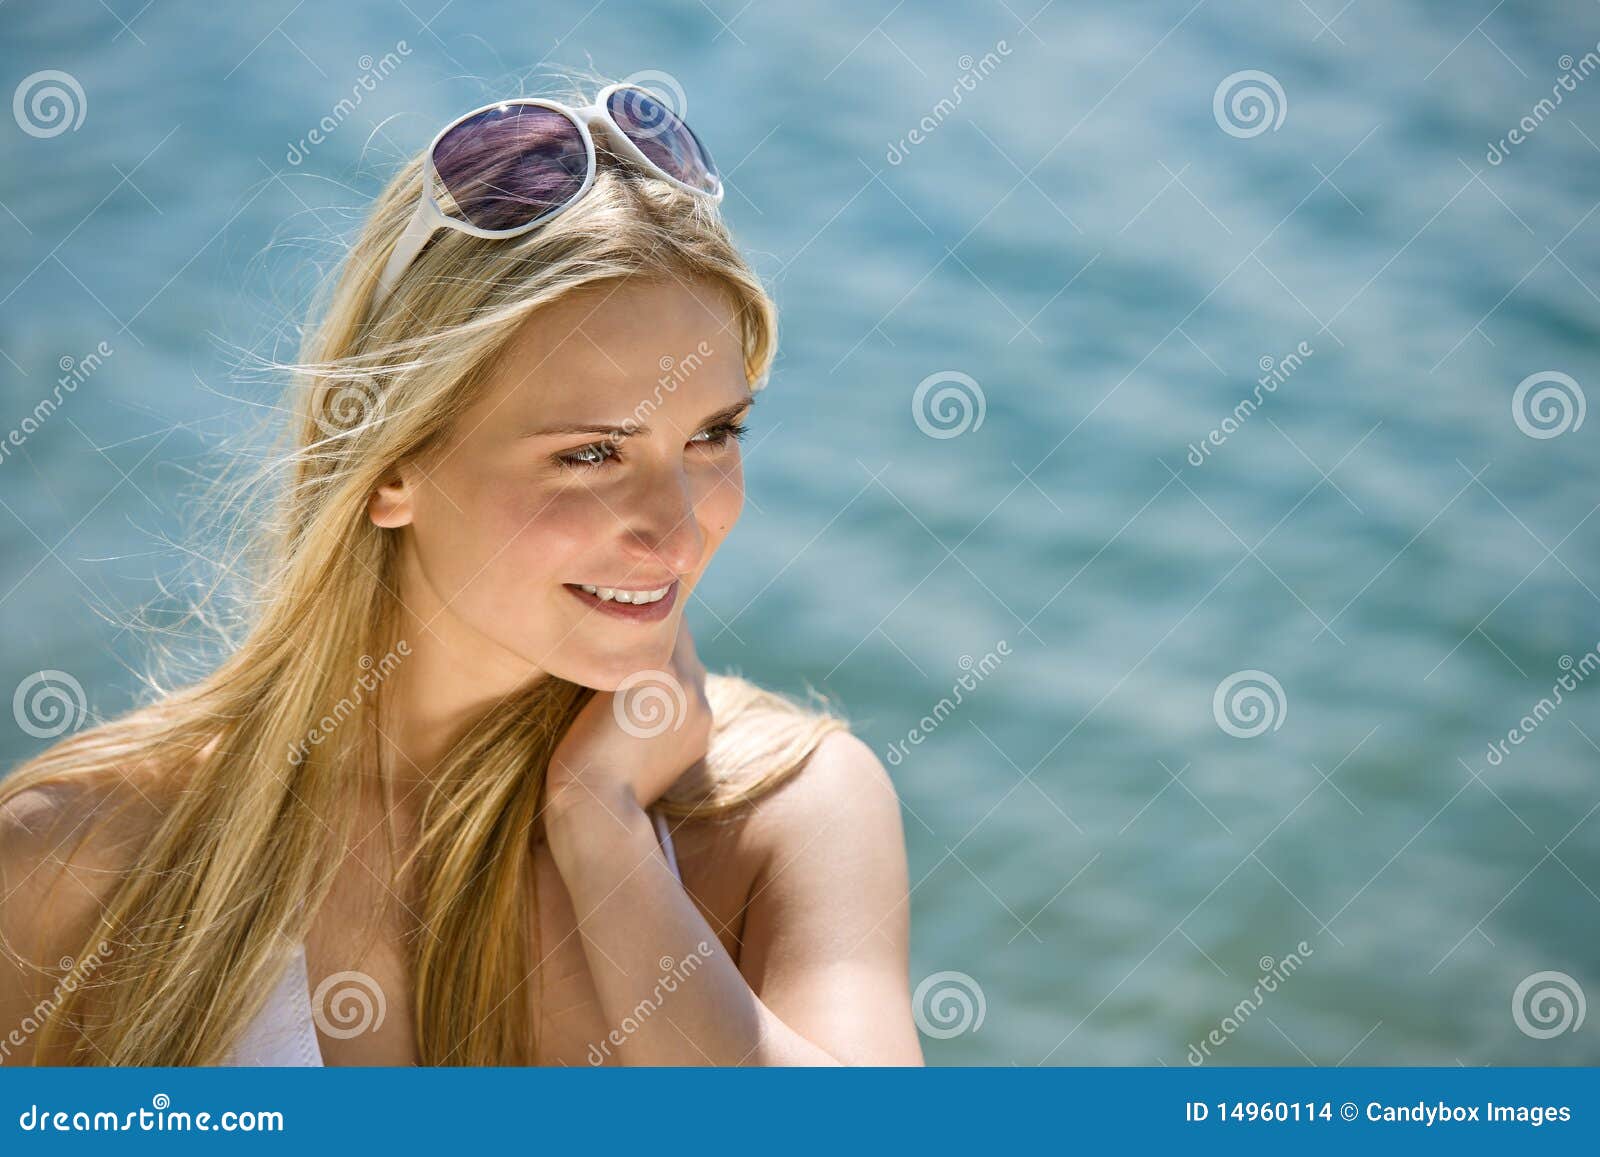 Blonde girl in bikini with sunglasses - wide 2